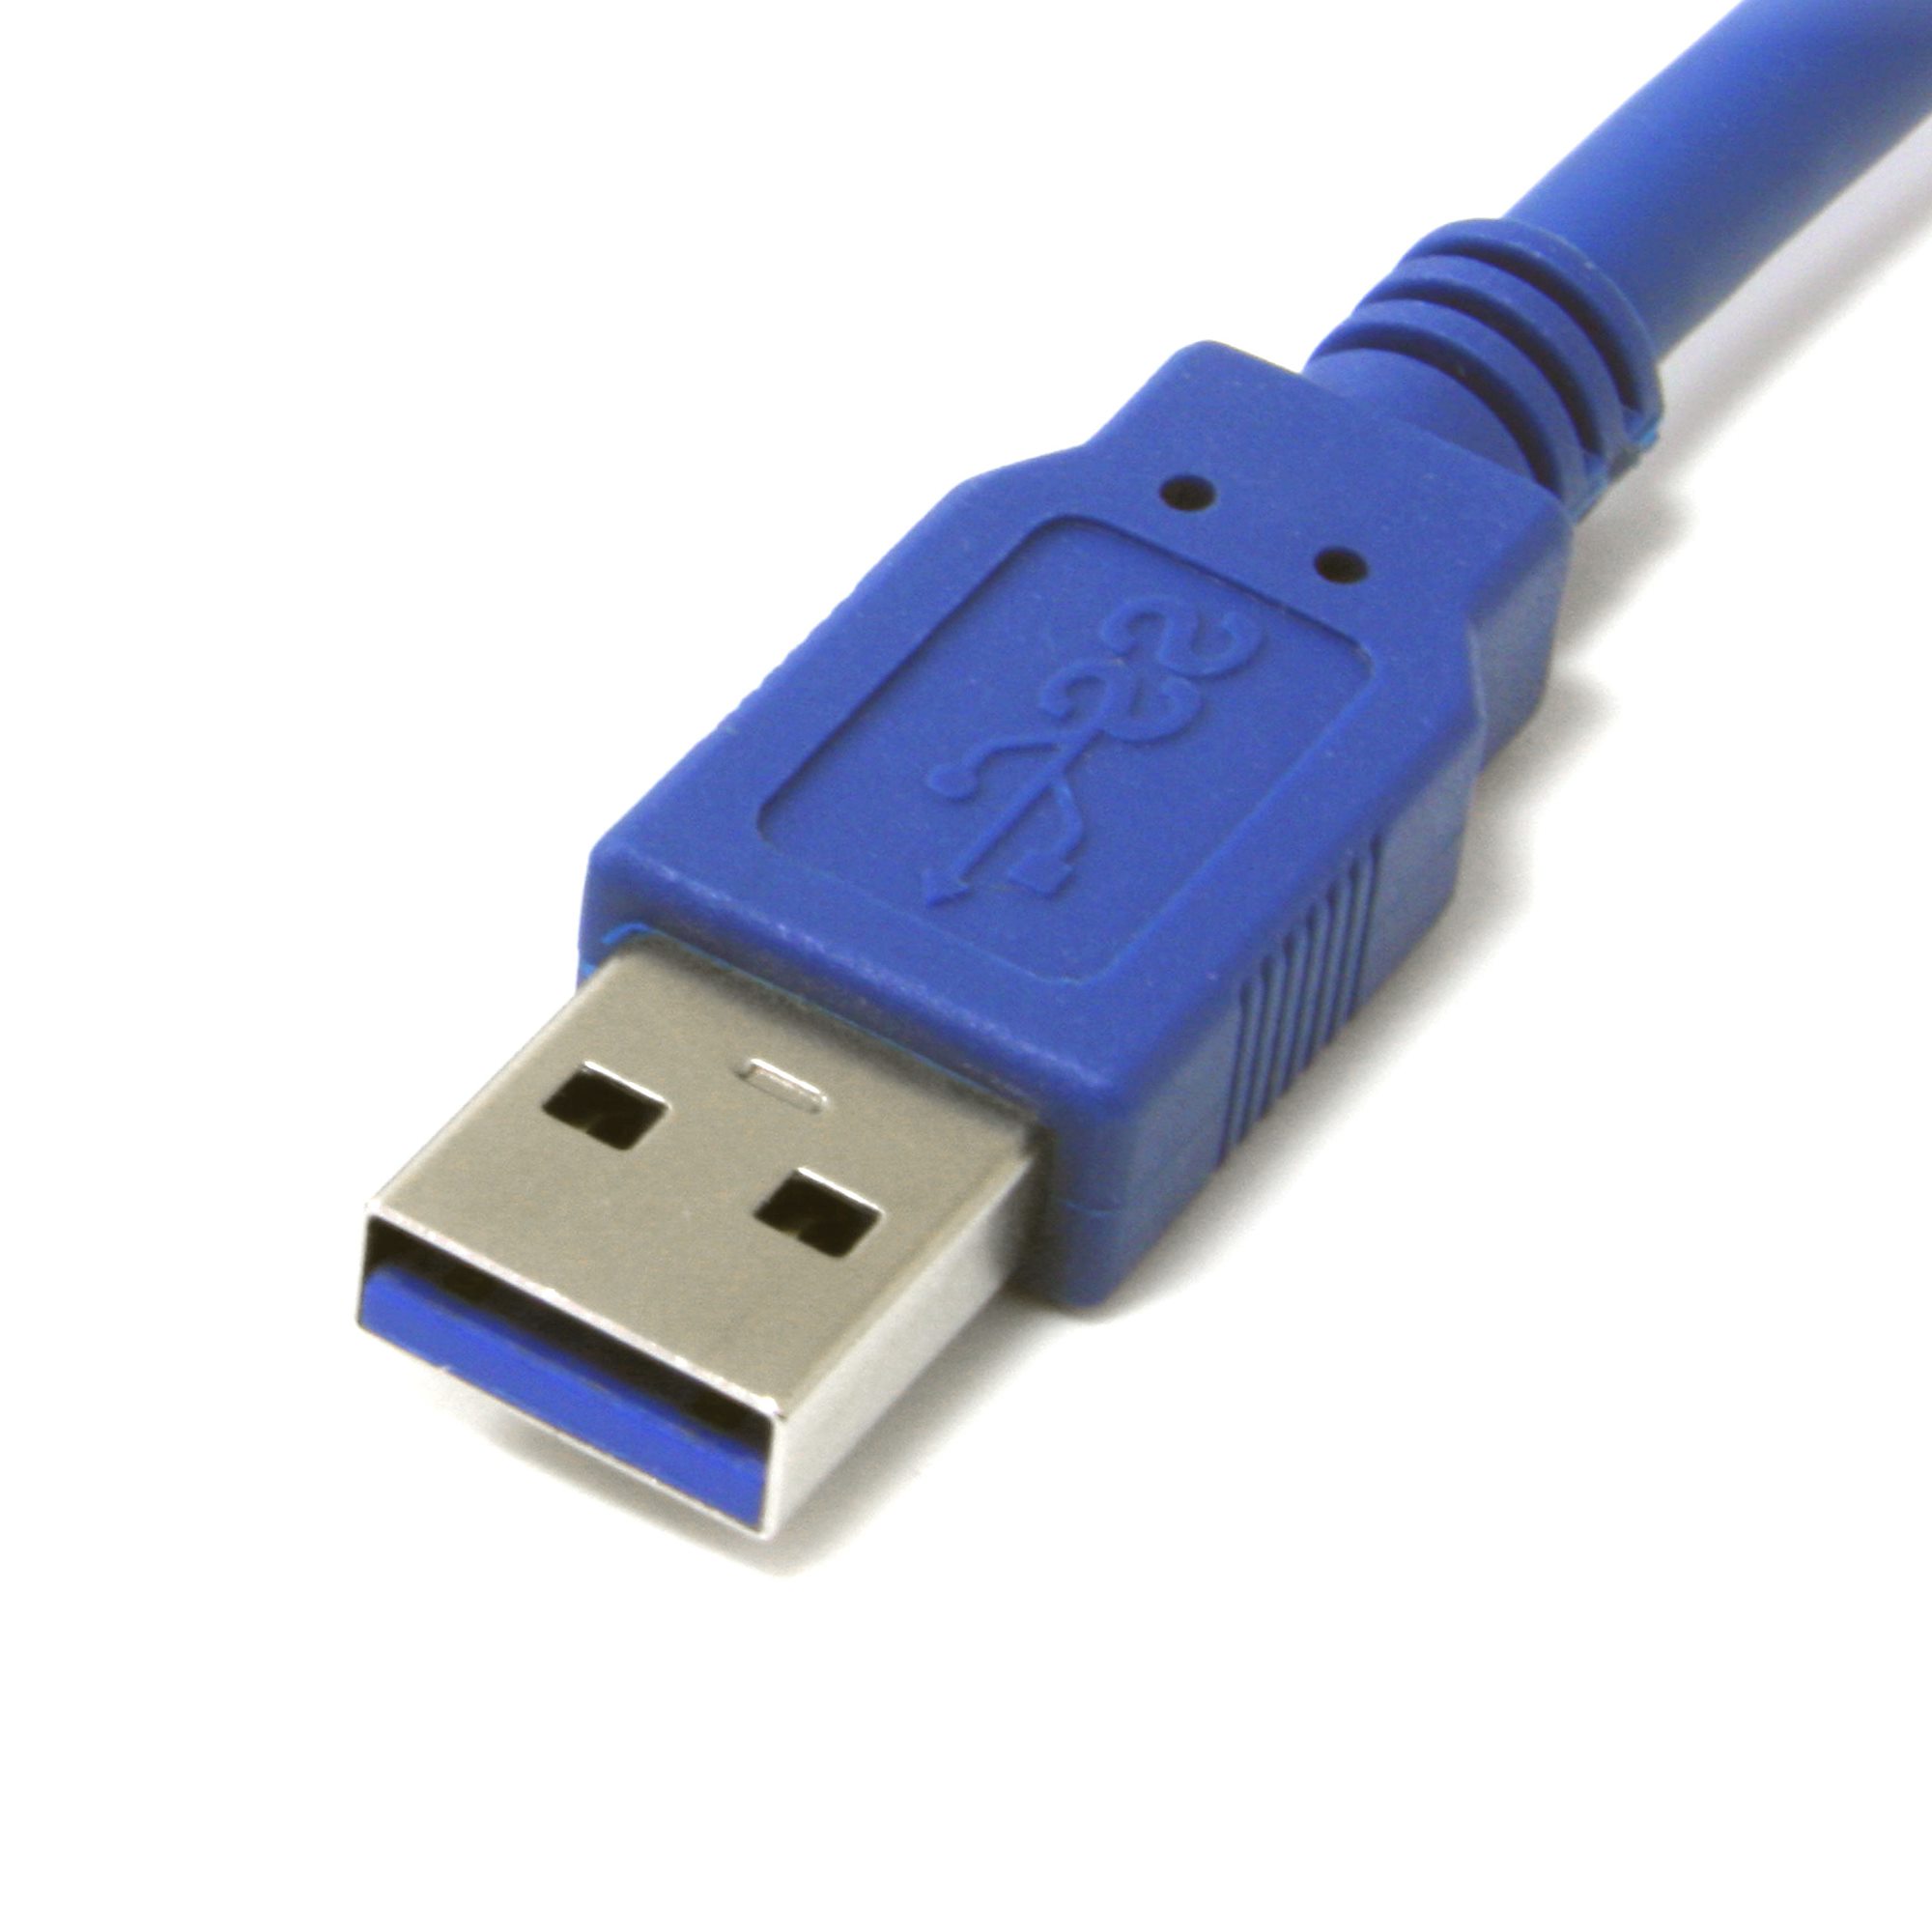 Startech Extensor USB 3.0 M-H 1m Negro - Cable USB